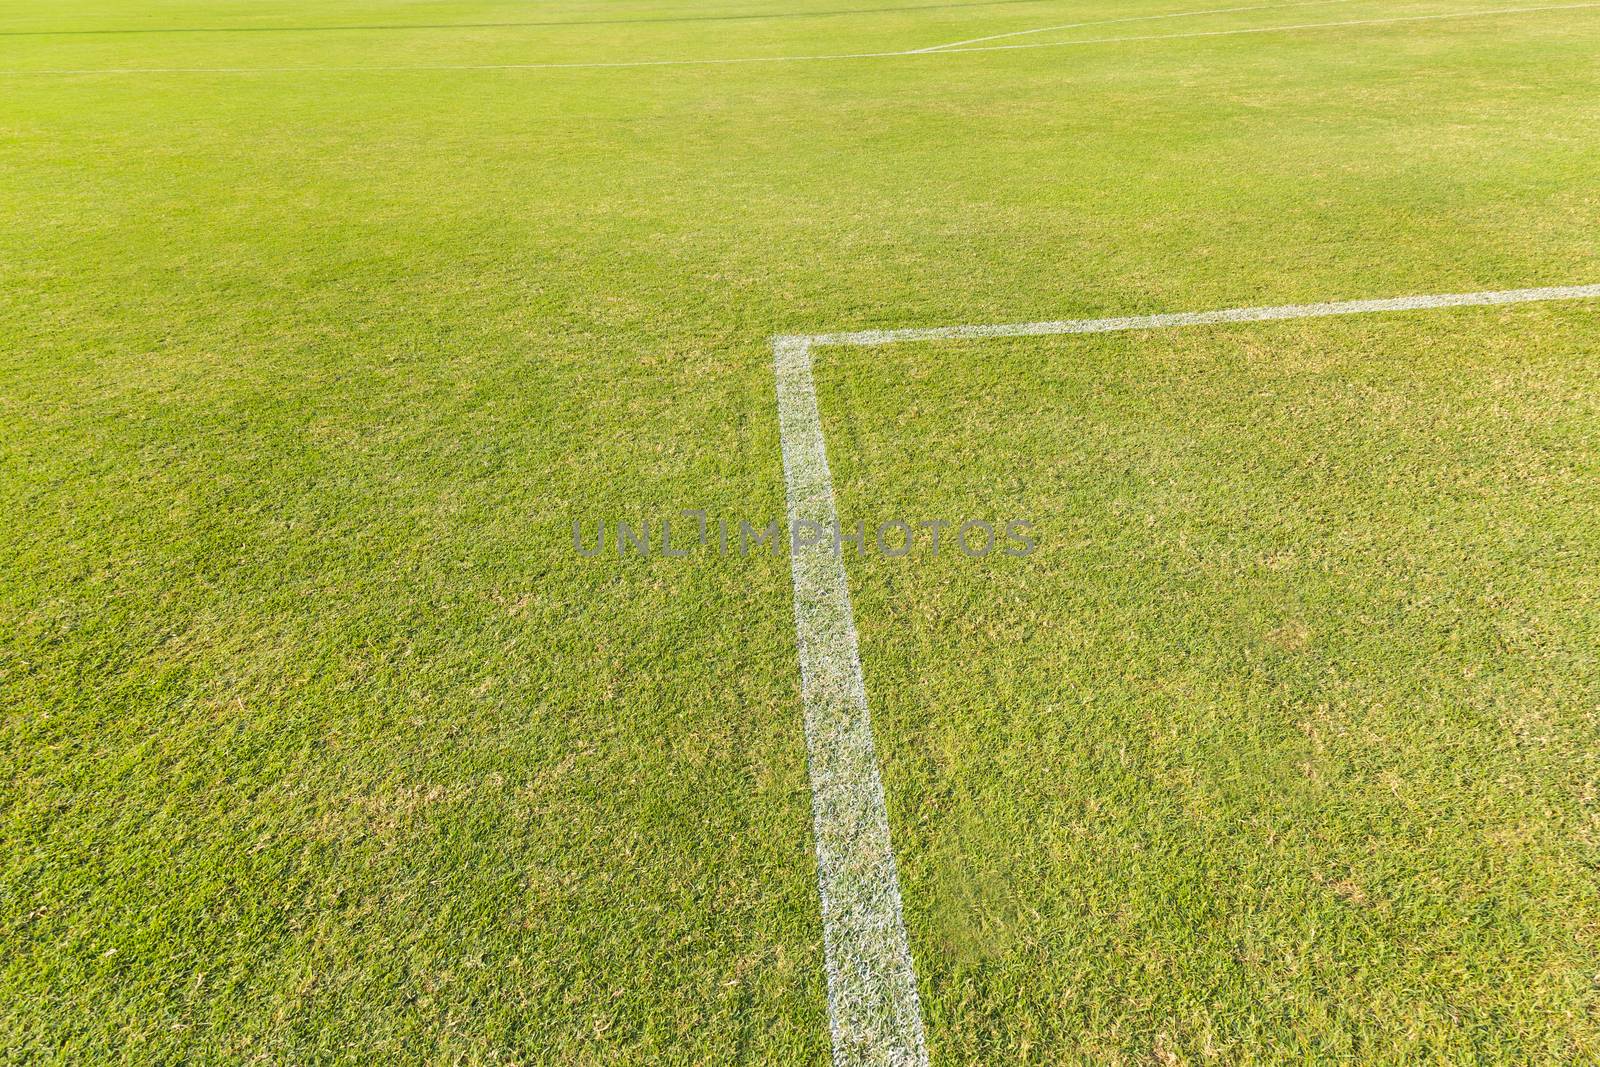 Green grass on the football field